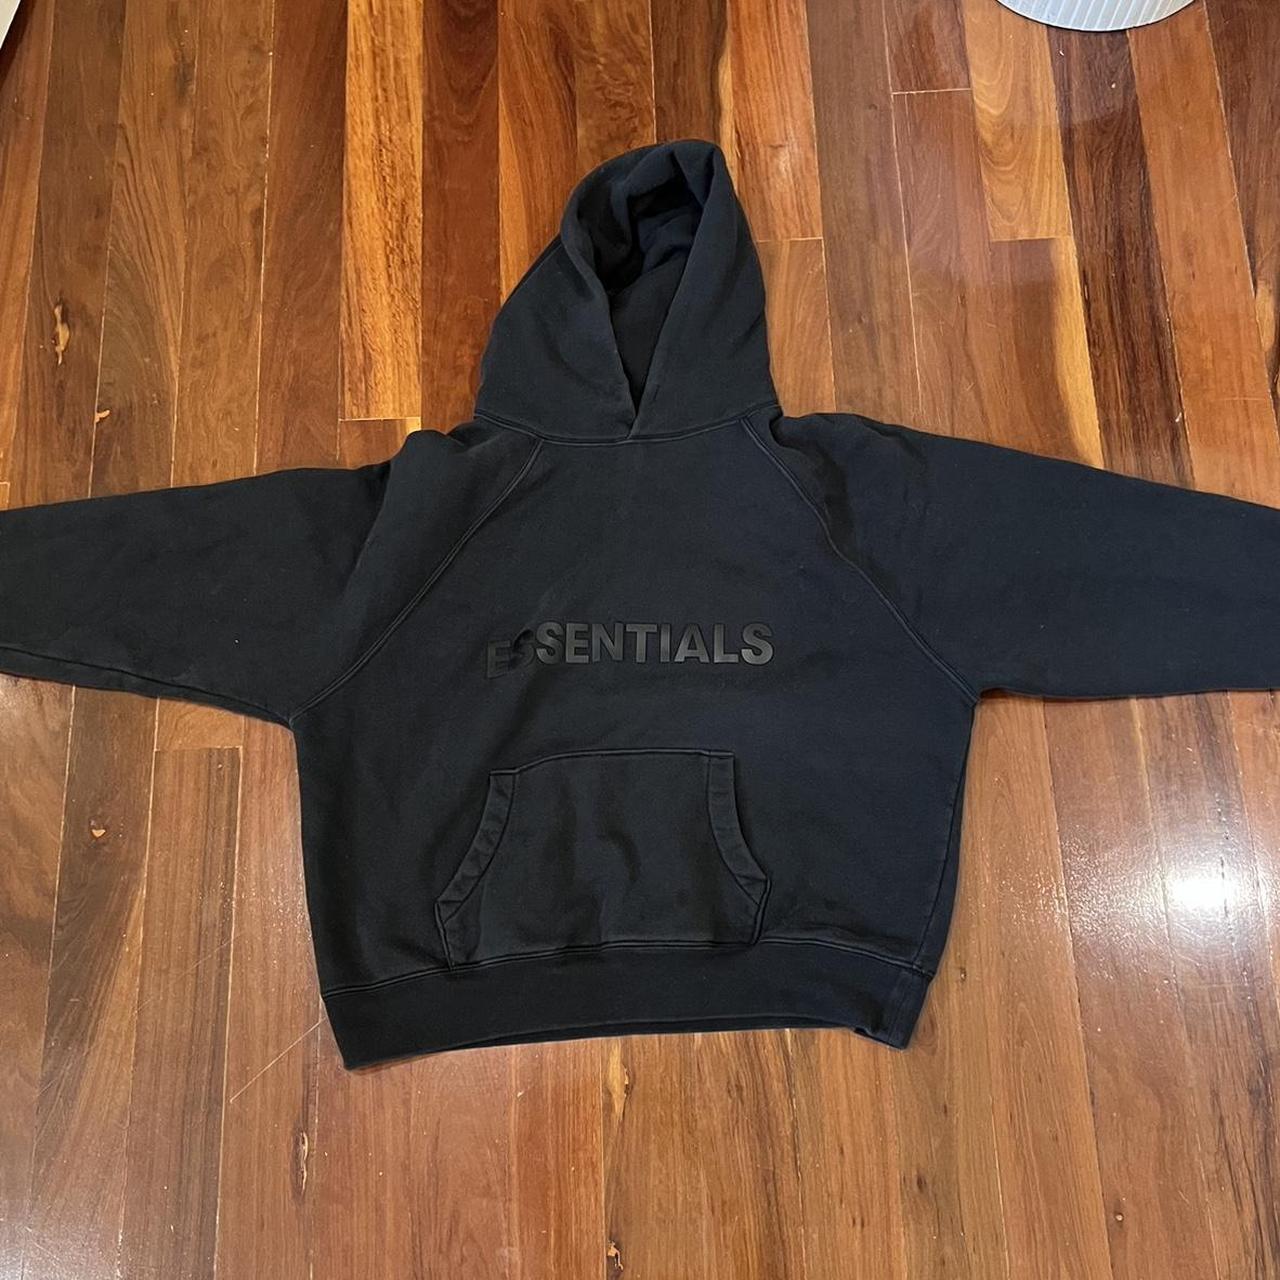 Fear of god Essentials pullover hoodie black - Depop